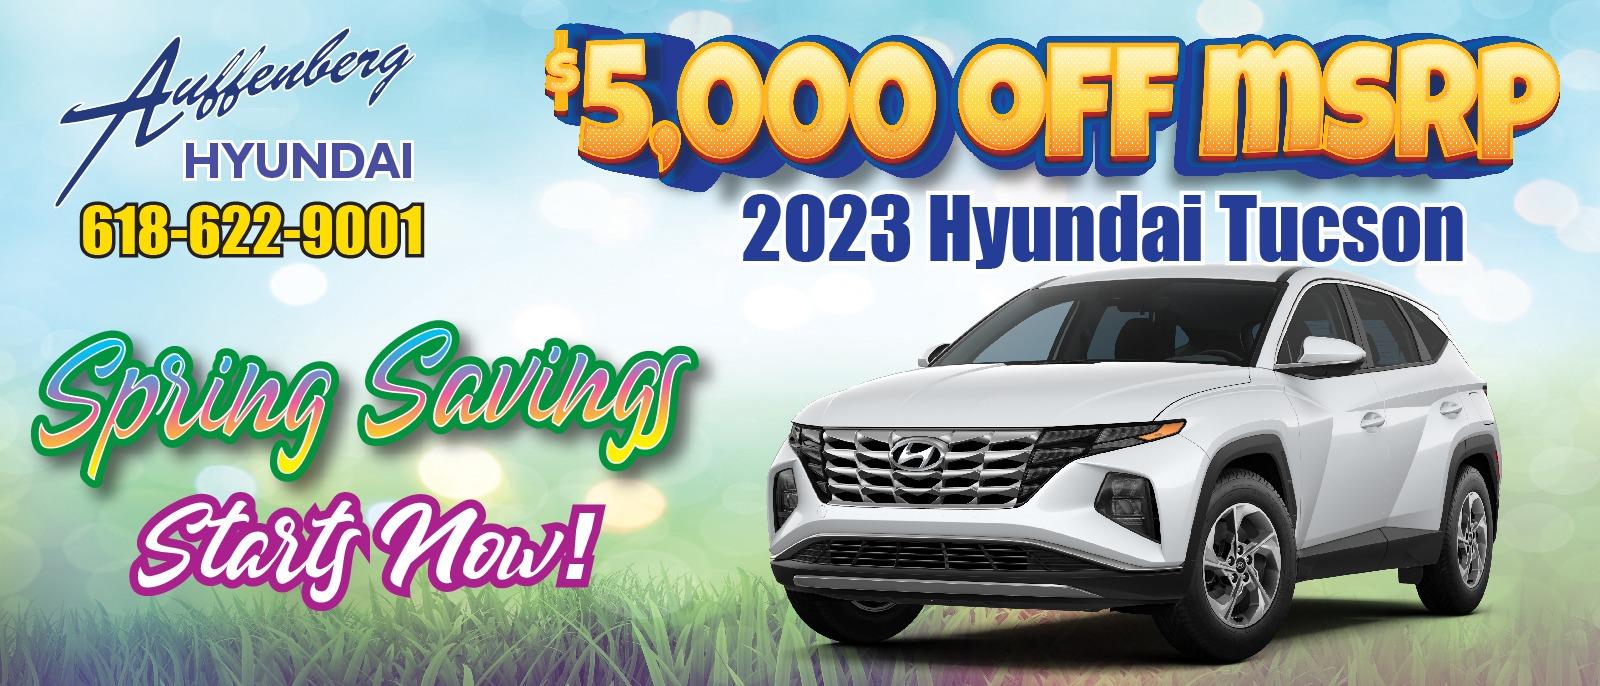 2023 Hyundai Tucson 
$5,000 Off MSRP